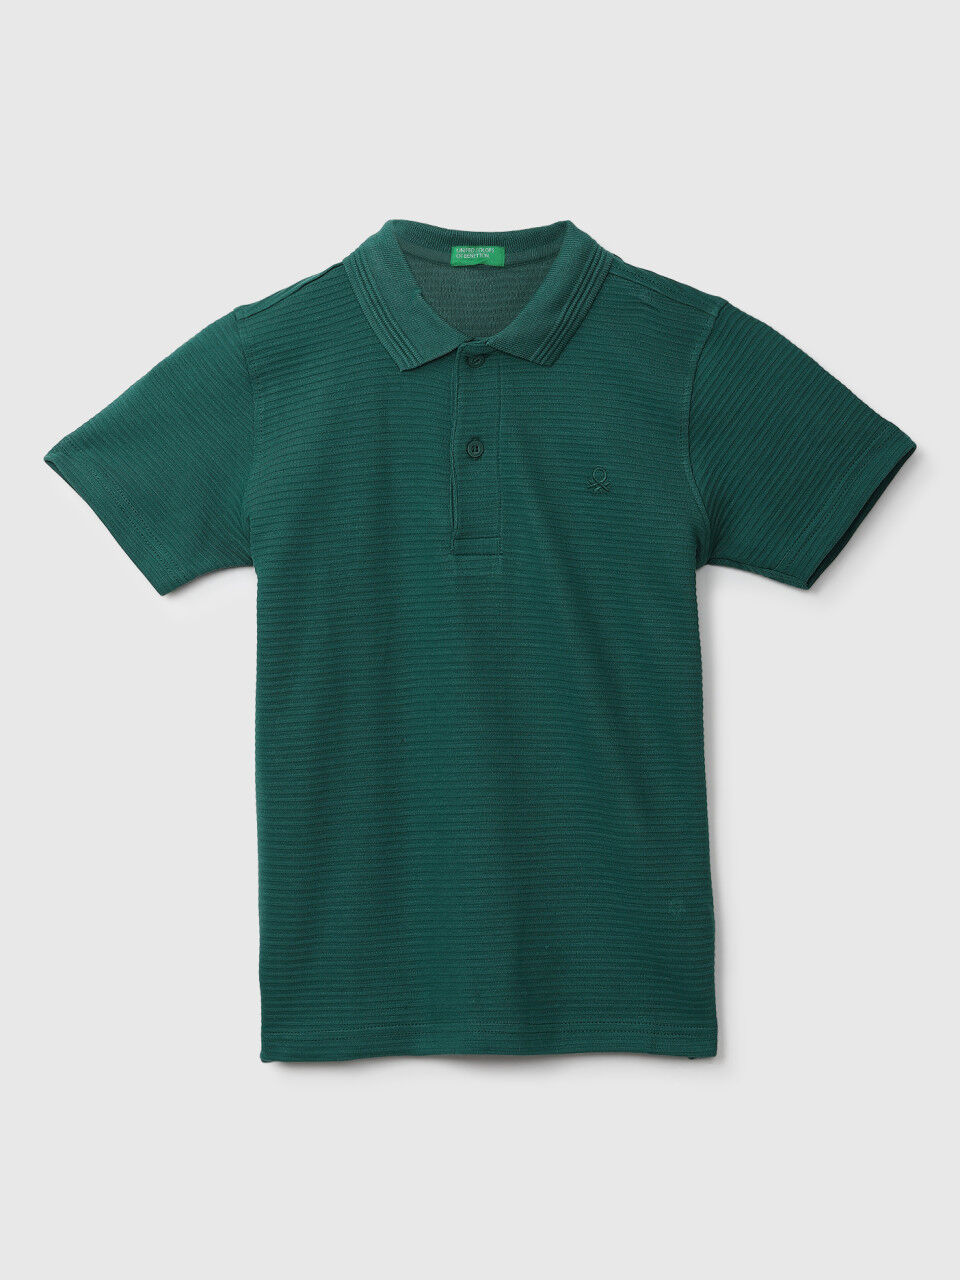 Kinder Jungs Shirts Shirt Polo Benetton 74 Color-blocking Tops und Hemden Poloshirts United Colors of Benetton Poloshirts 